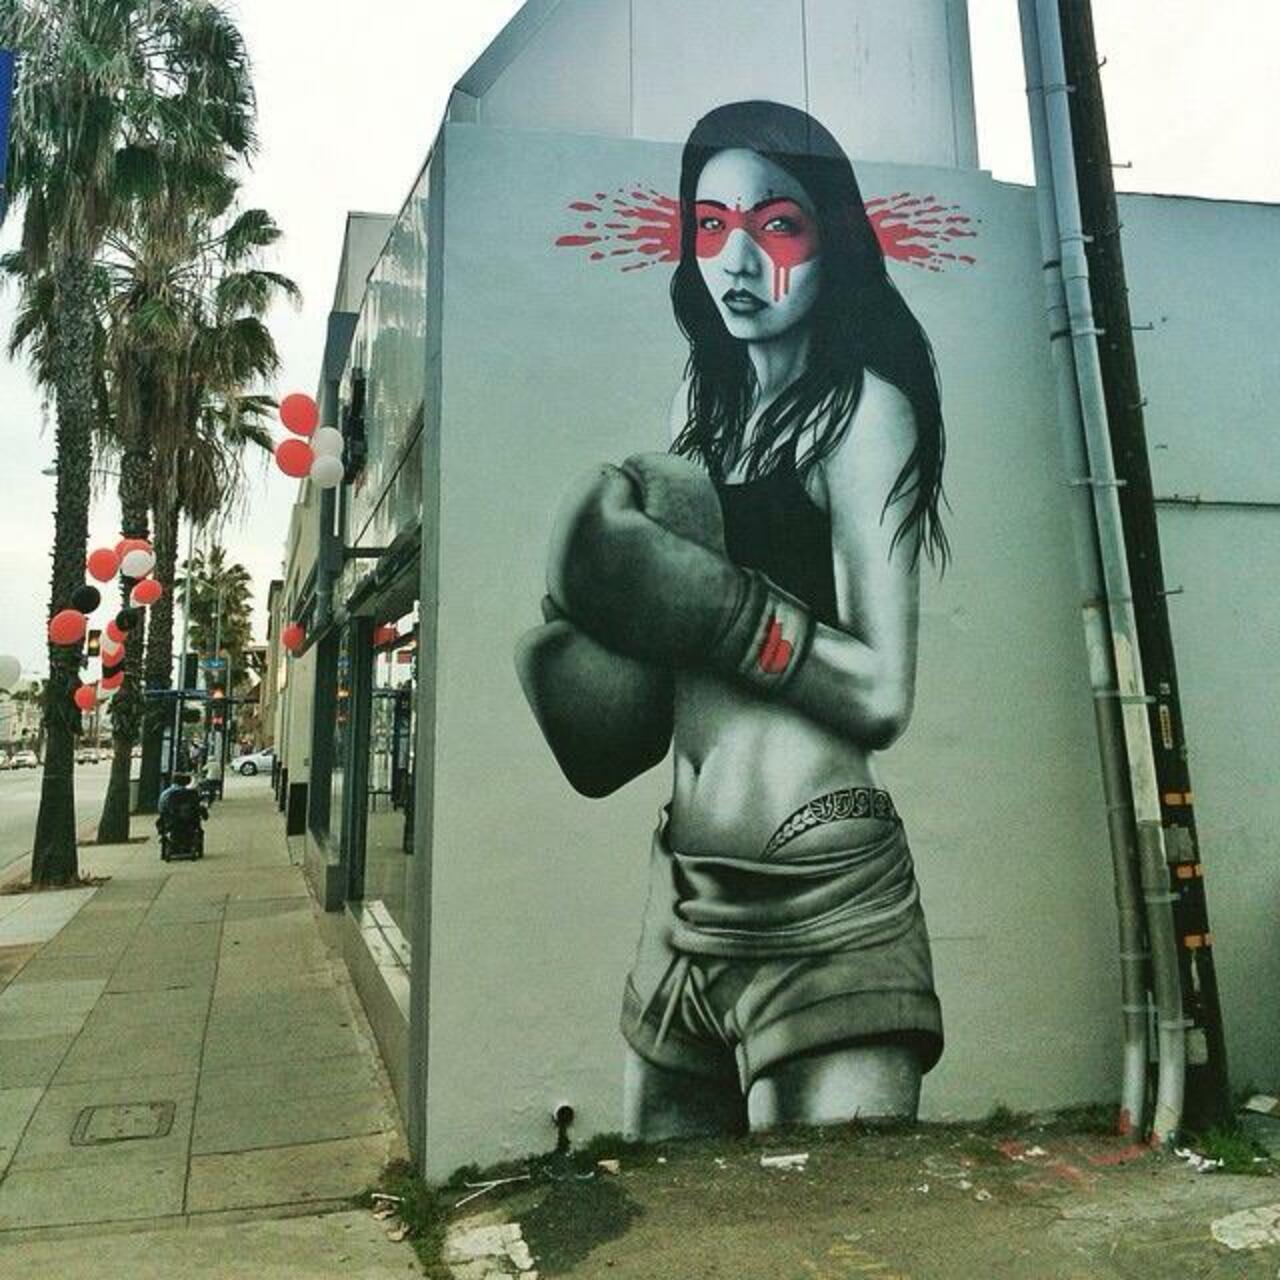 New Street Art by the artist FinDac in Santa Monica, CA 

#art #arte #graffiti #streetart http://t.co/gJXbJU2DfS